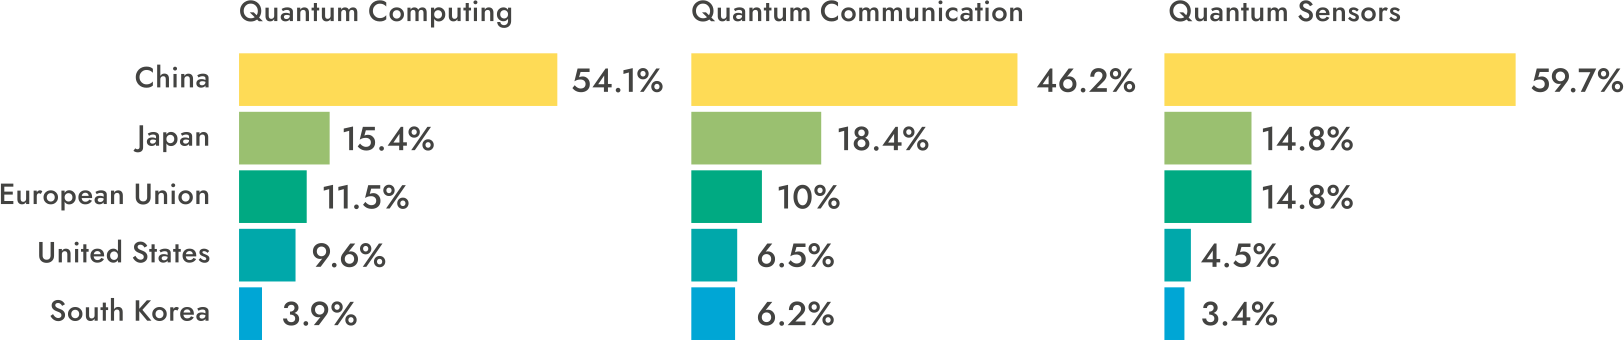 Three bar charts. Chart 1 Quantum Computing: China 54.1%. Japan 15.4%, European Union 11.5%, United States 9.6%, South Korea 3.9%; Chart 2 Quantum Communication: China 46.2%. Japan 18.4%, European Union 10%, United States 6.5%, South Korea 6.2%; Chart 3 Quantum Sensors, China 59.7%. Japan 14.8%, European Union 14.8%, United States 4.5%, South Korea 3.4%